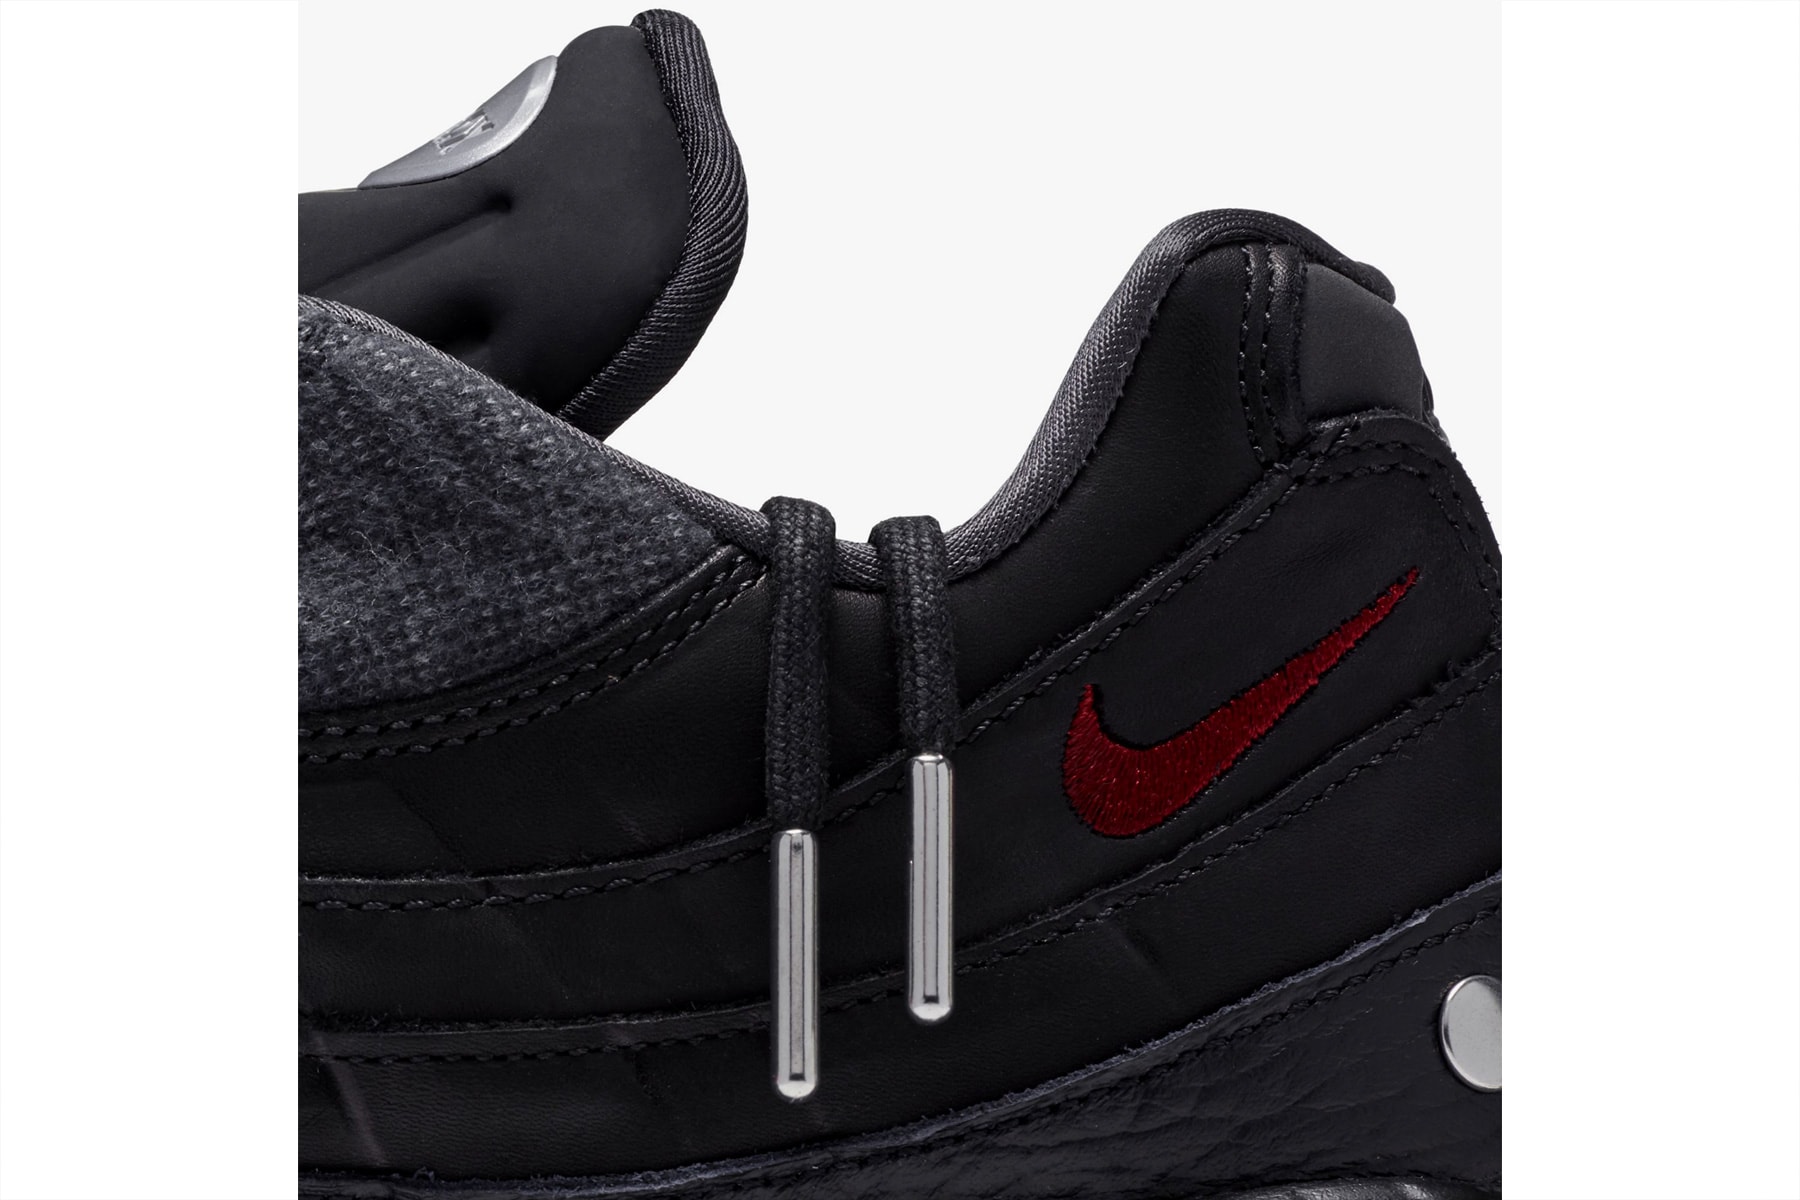 Nike Air Max 95 NRG Black anthracite Grey Wool Colorway release date sneaker first look kicks price